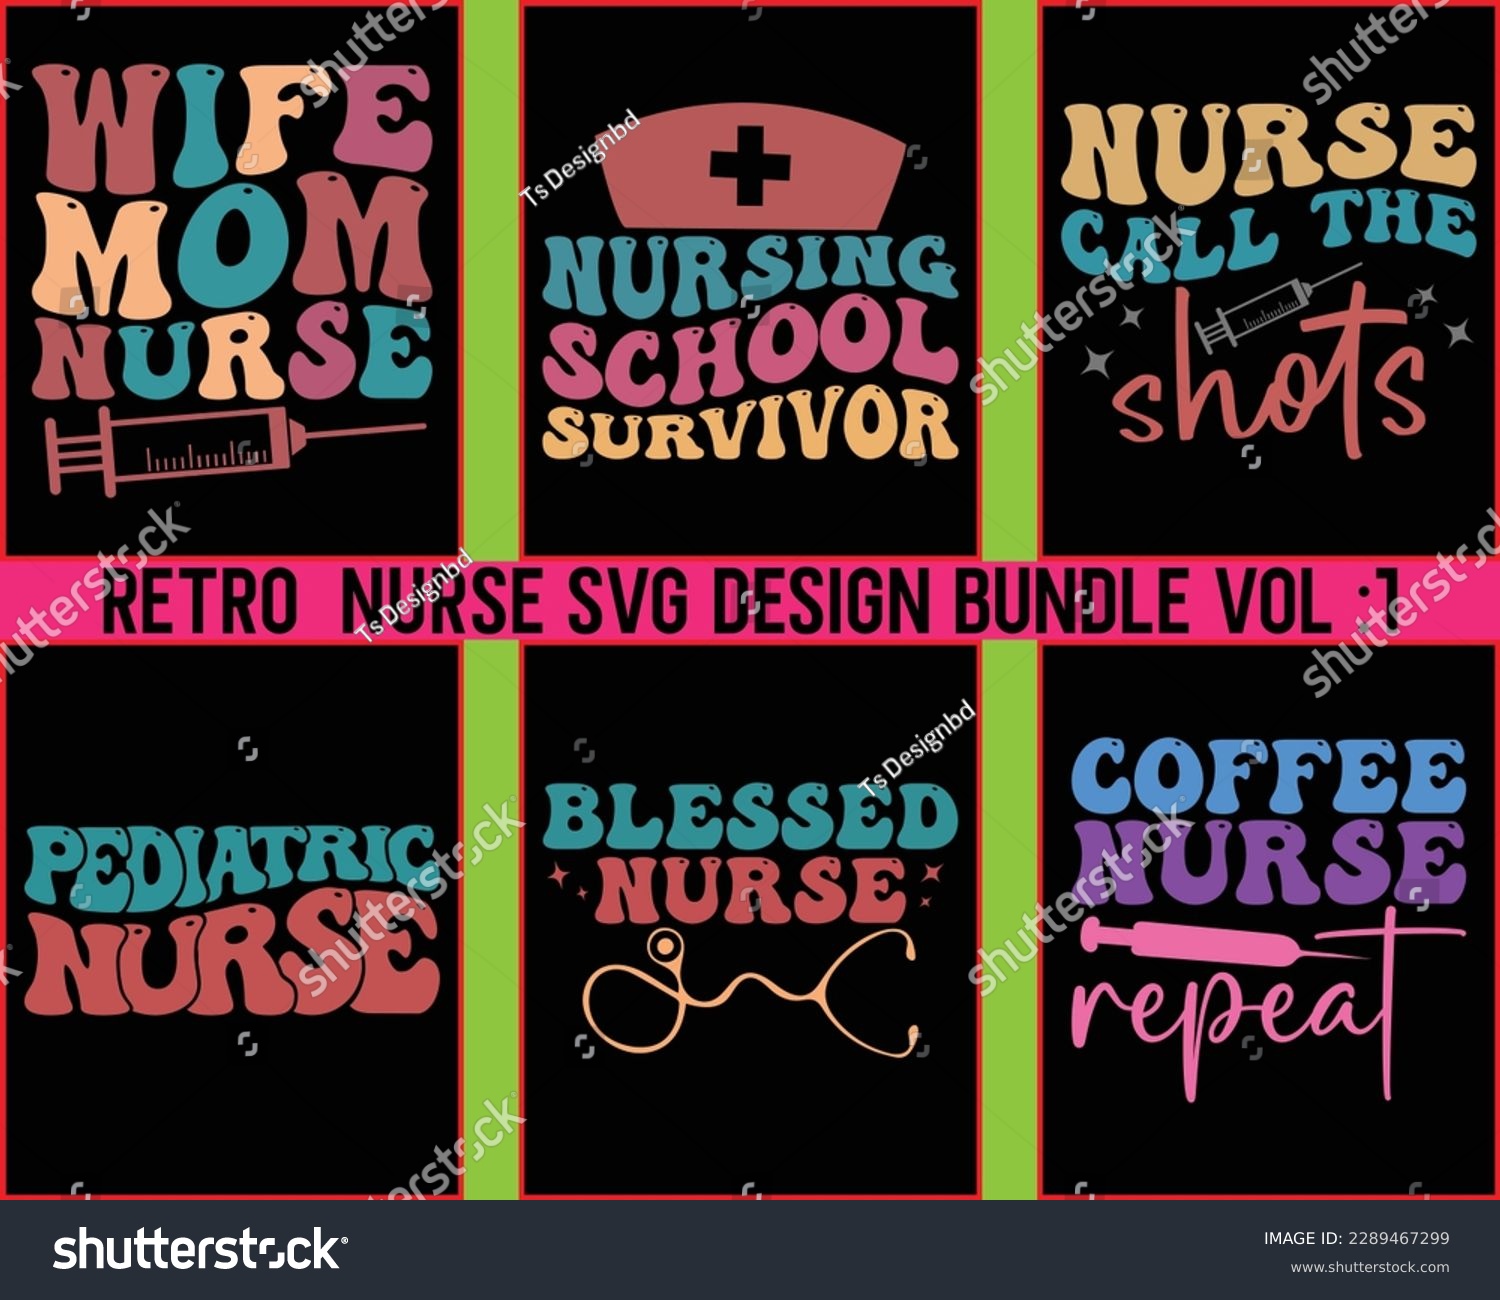 SVG of Nurse Retro Svg Design Bundle  Vol 1,Retro Nurse Svg Bundle, nurse svg bundle, nurse T shirt design,nurse svg, Doctor Svg,Nurse Life Svg,nurse vintage design svg